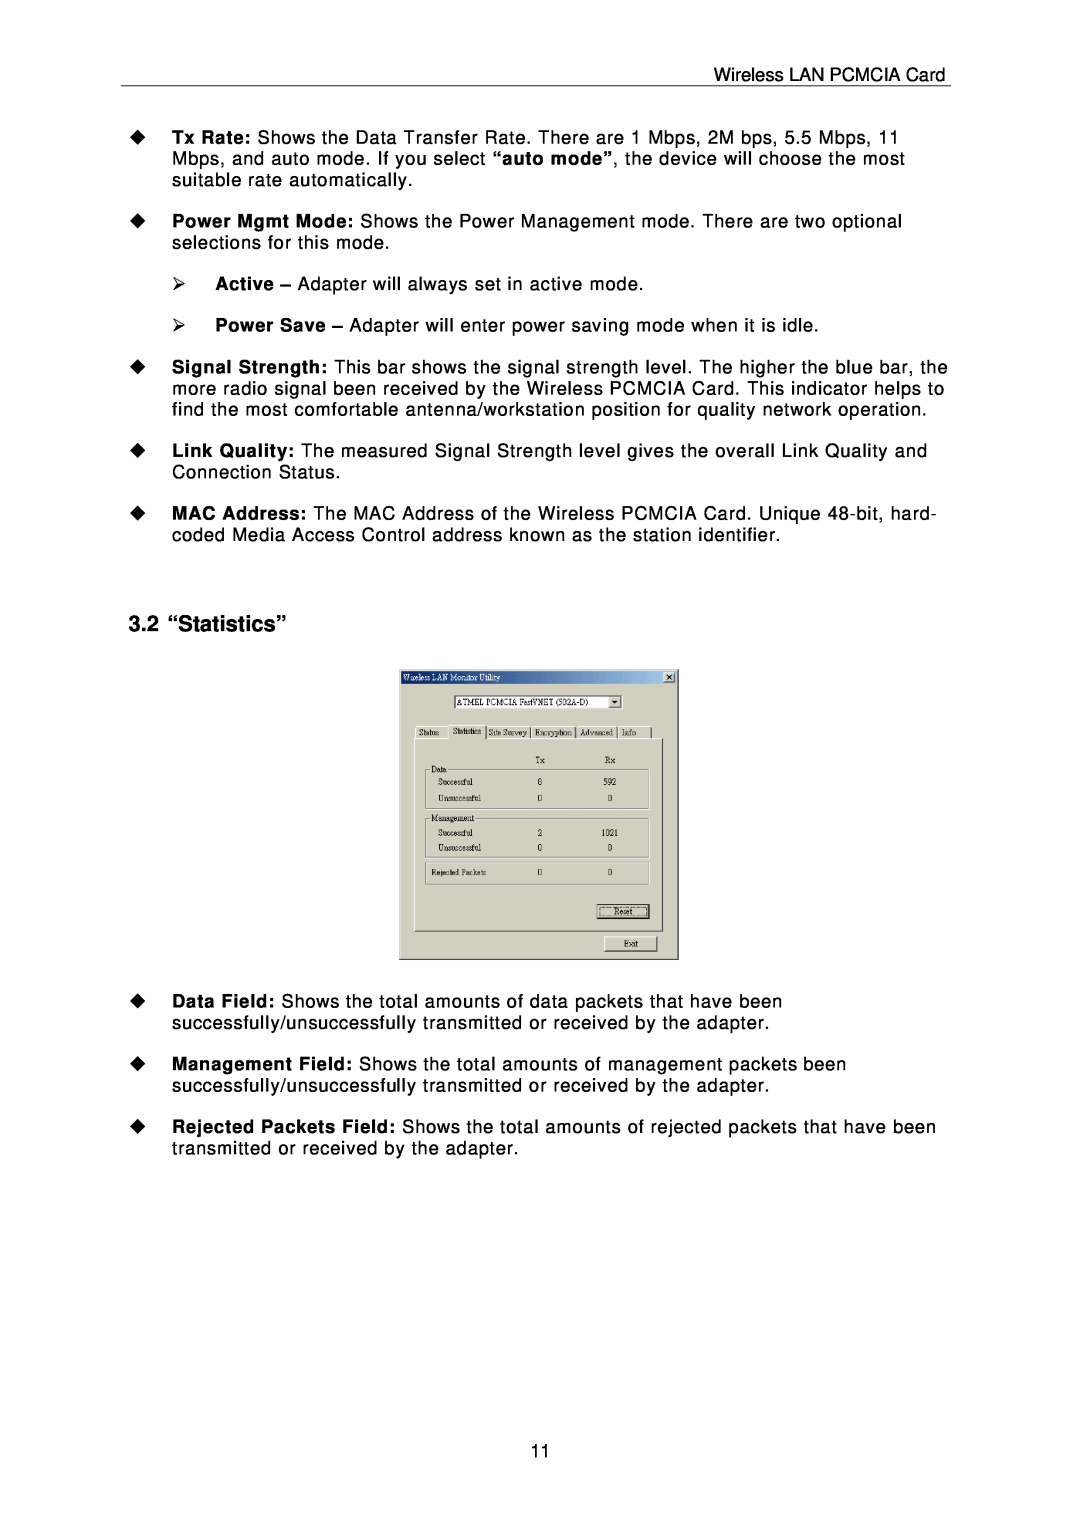 IBM PCMCIA Card user manual 3.2 “Statistics” 